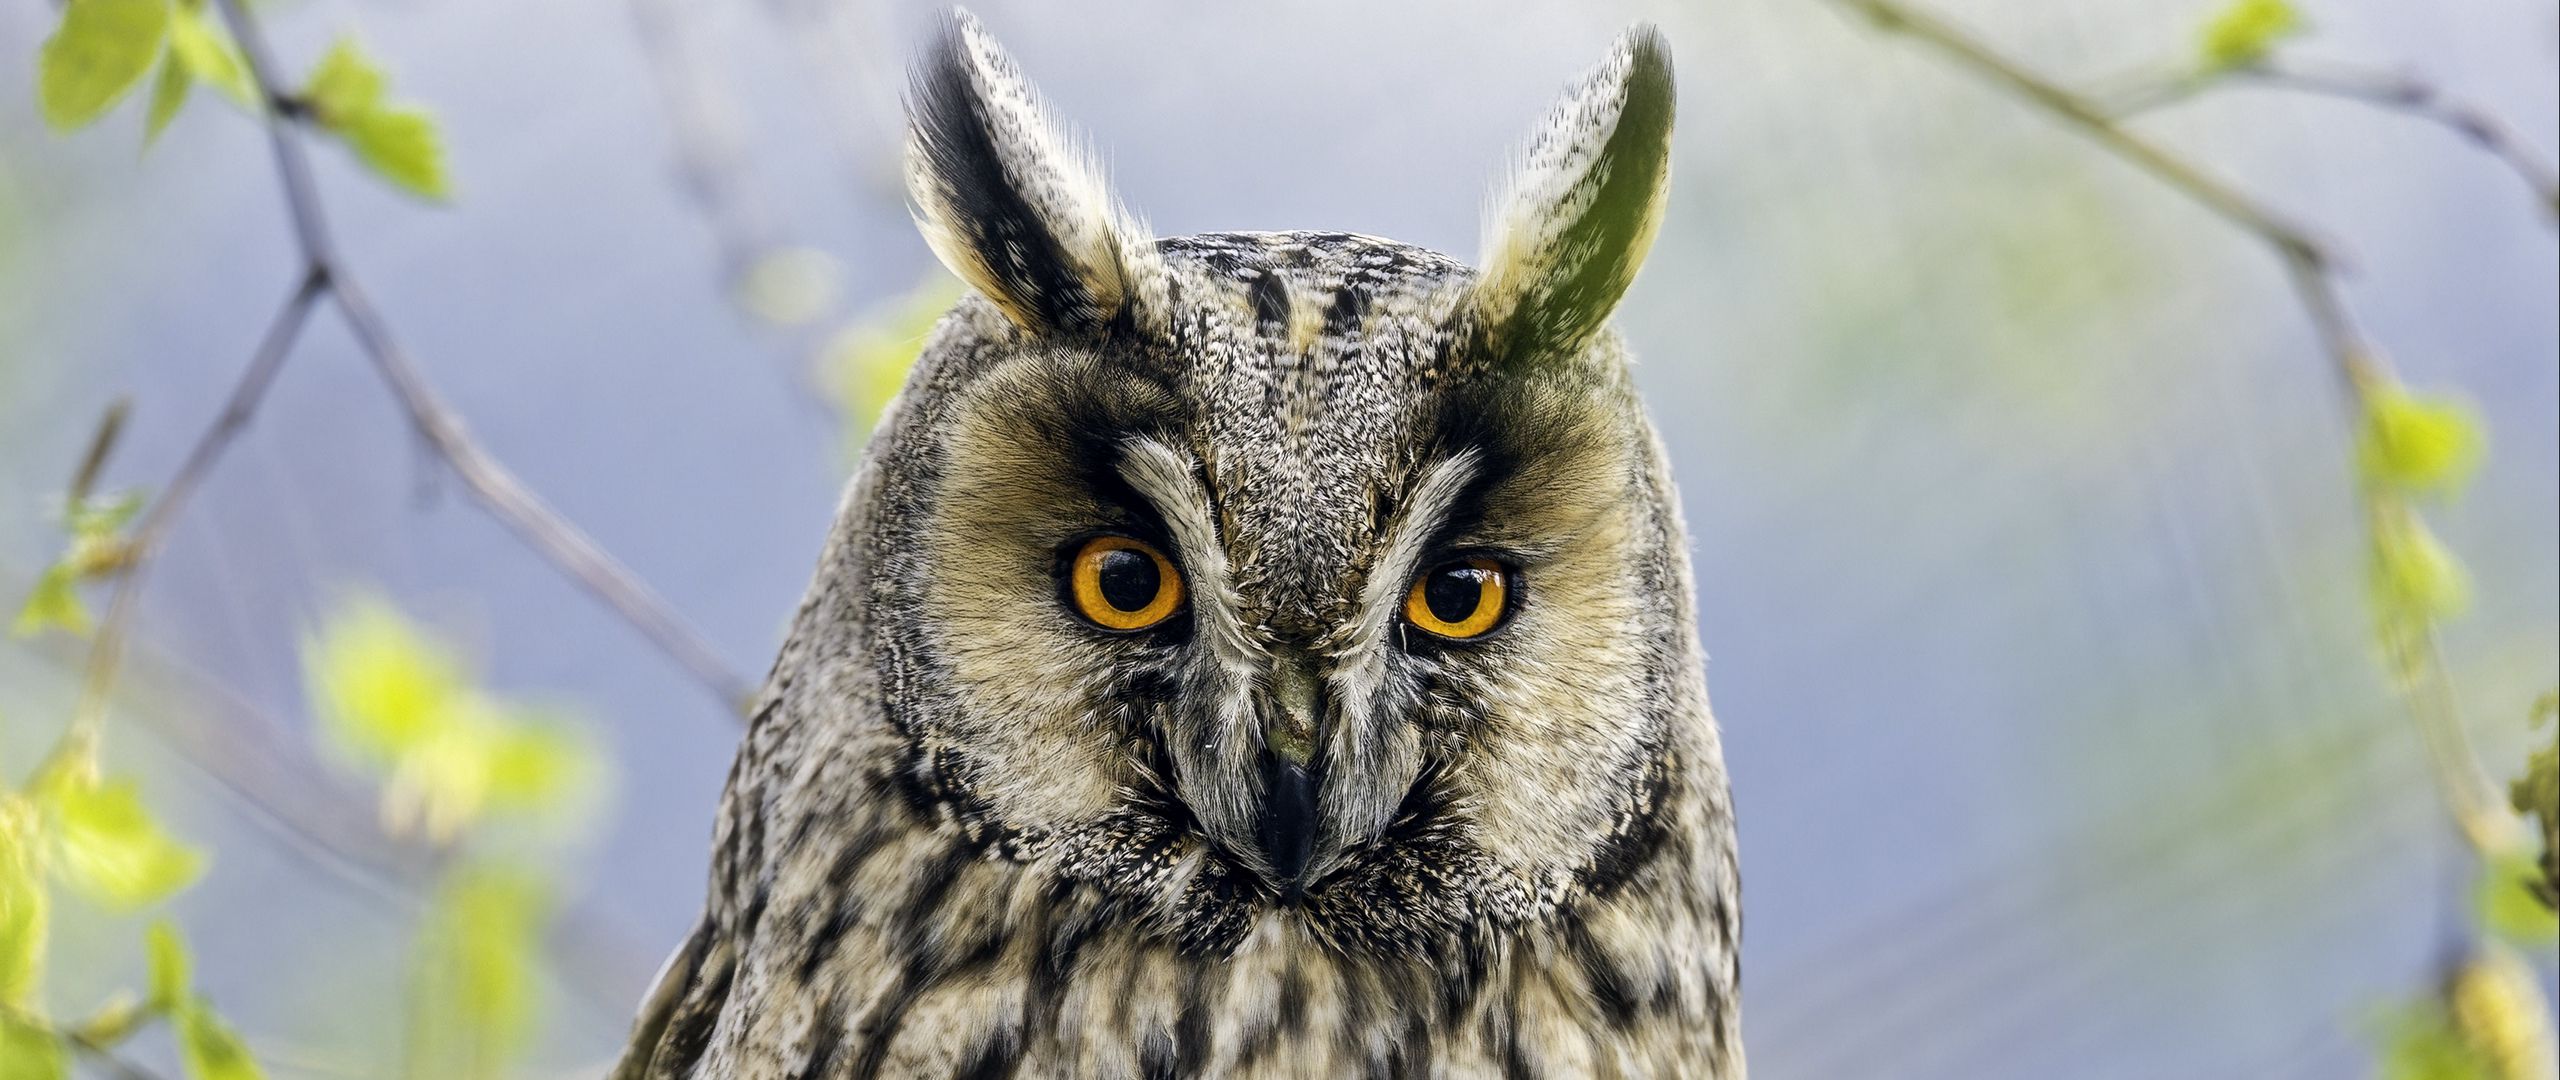 Wallpaper Owl looking at the camera